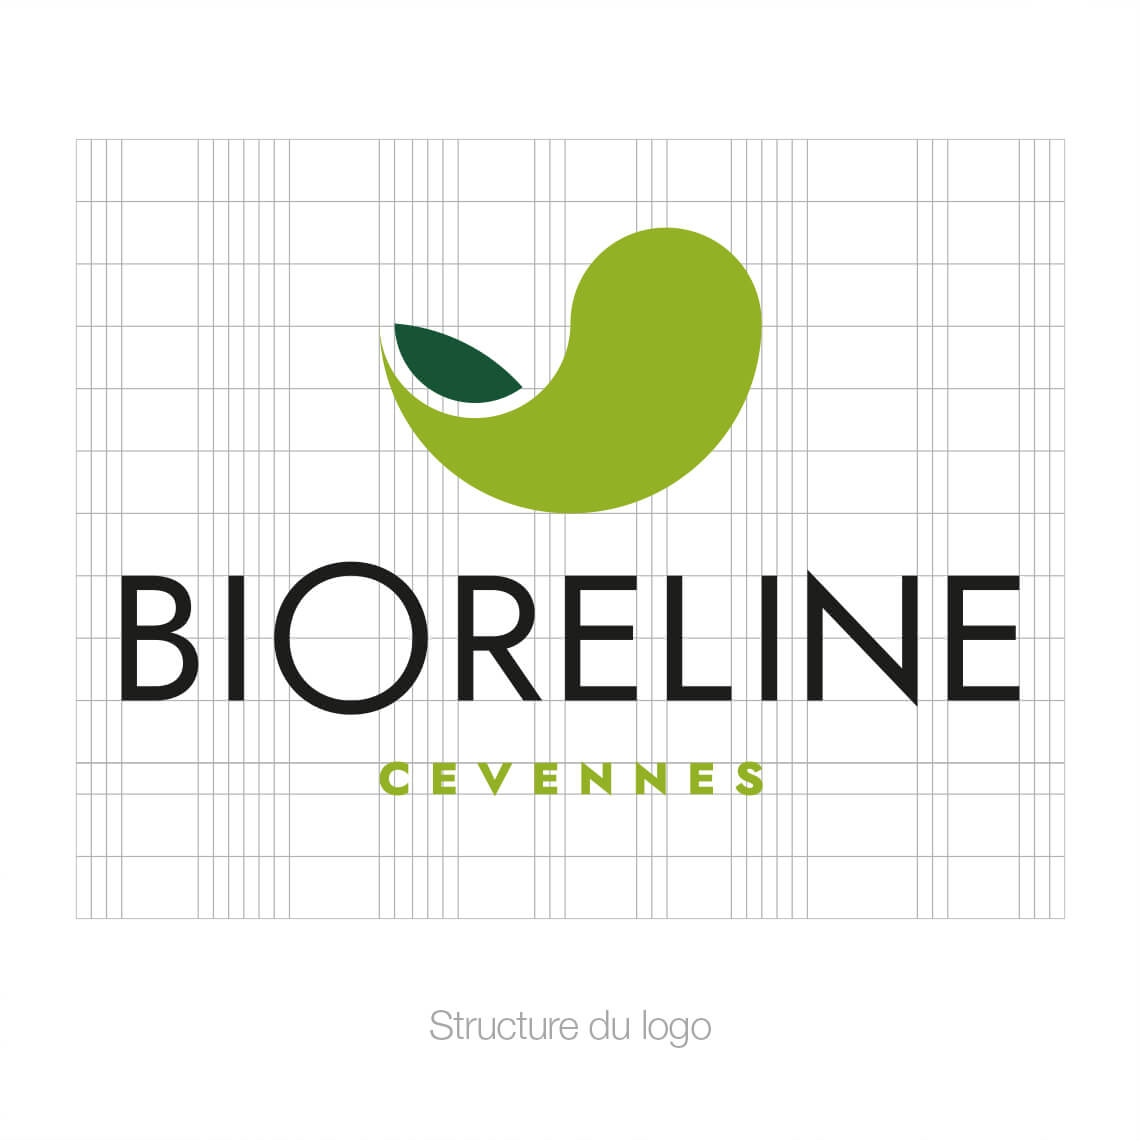 Structure du logo Bioreline